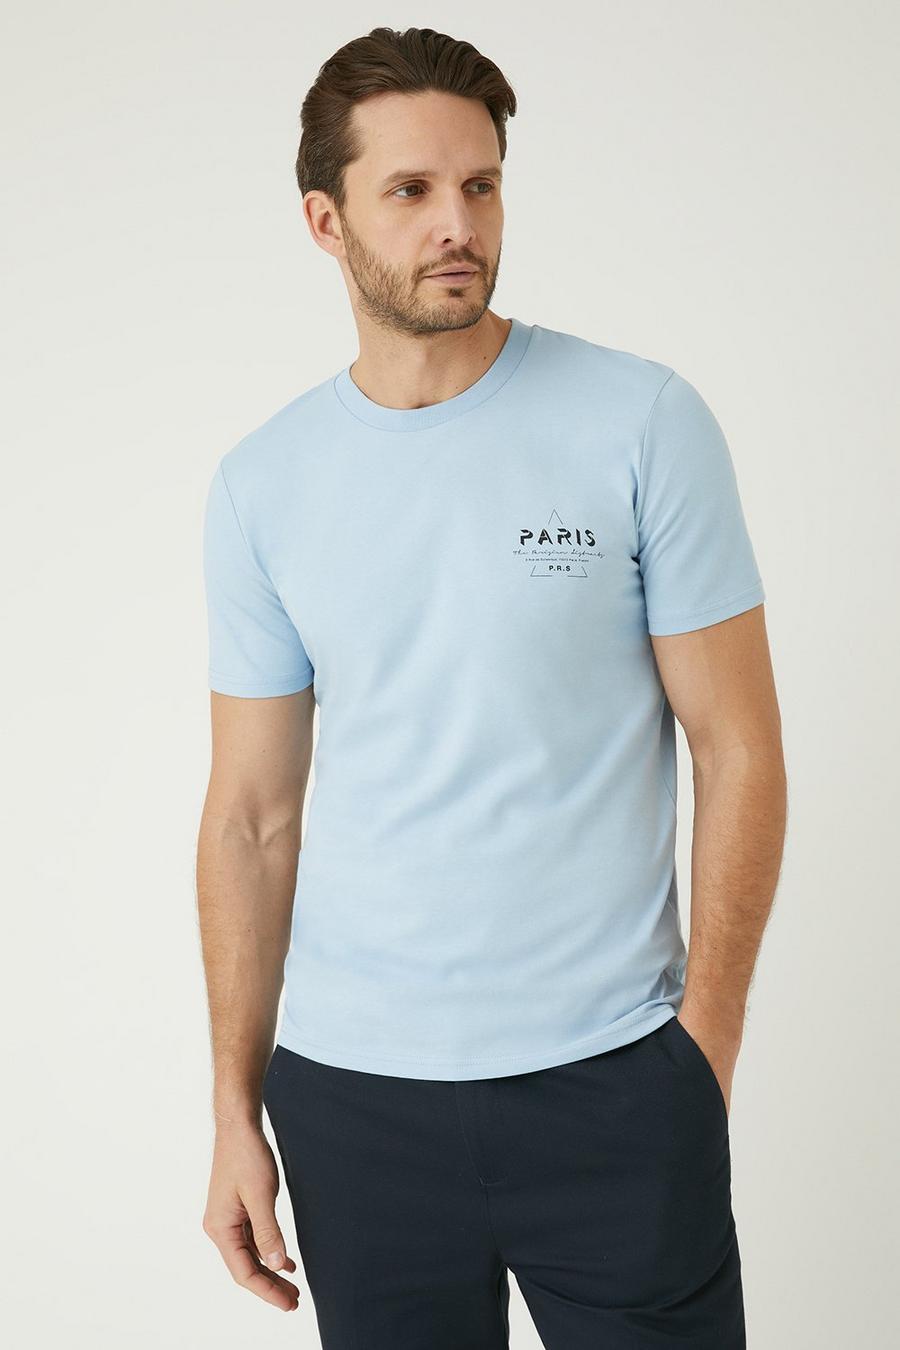 Pale Blue Short Sleeve Paris Print T-shirt